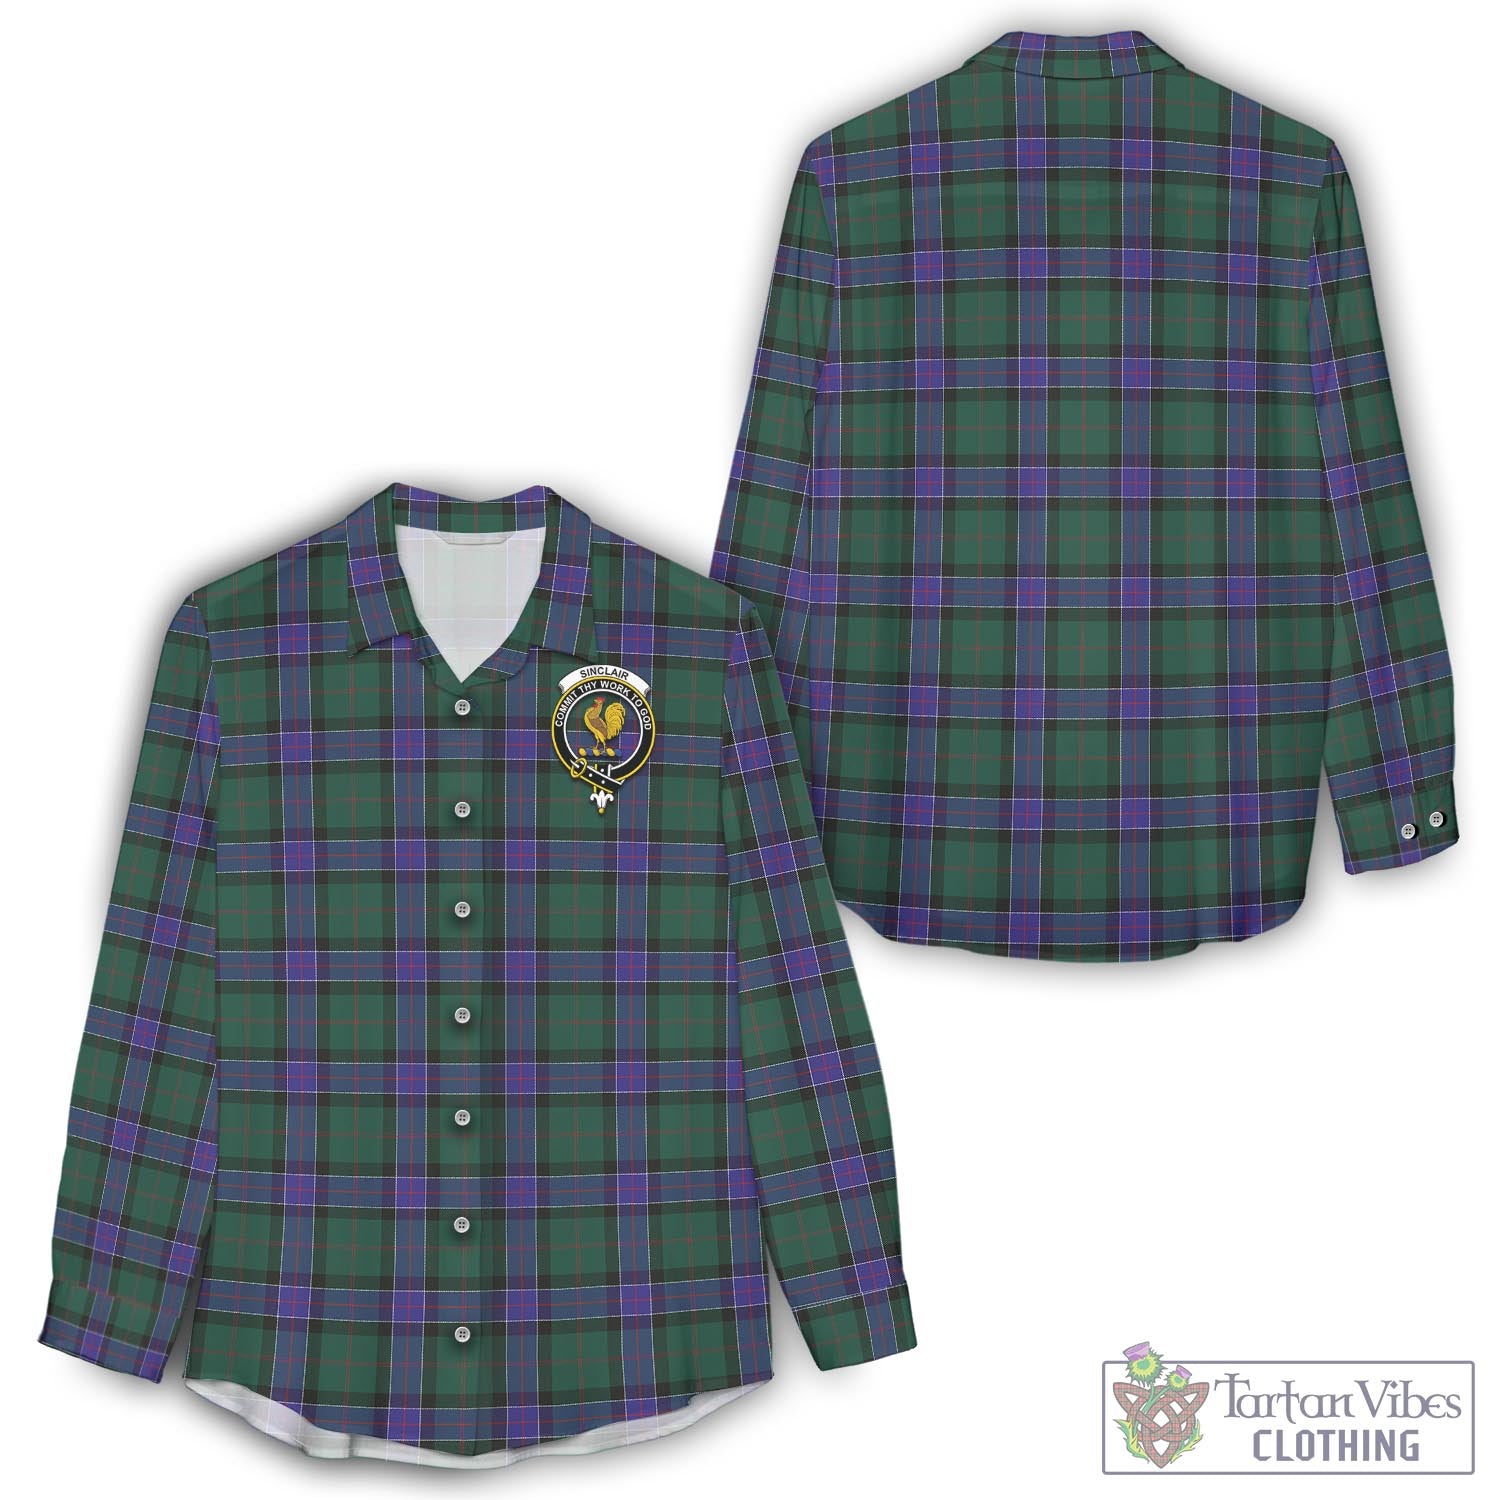 Tartan Vibes Clothing Sinclair Hunting Modern Tartan Womens Casual Shirt with Family Crest